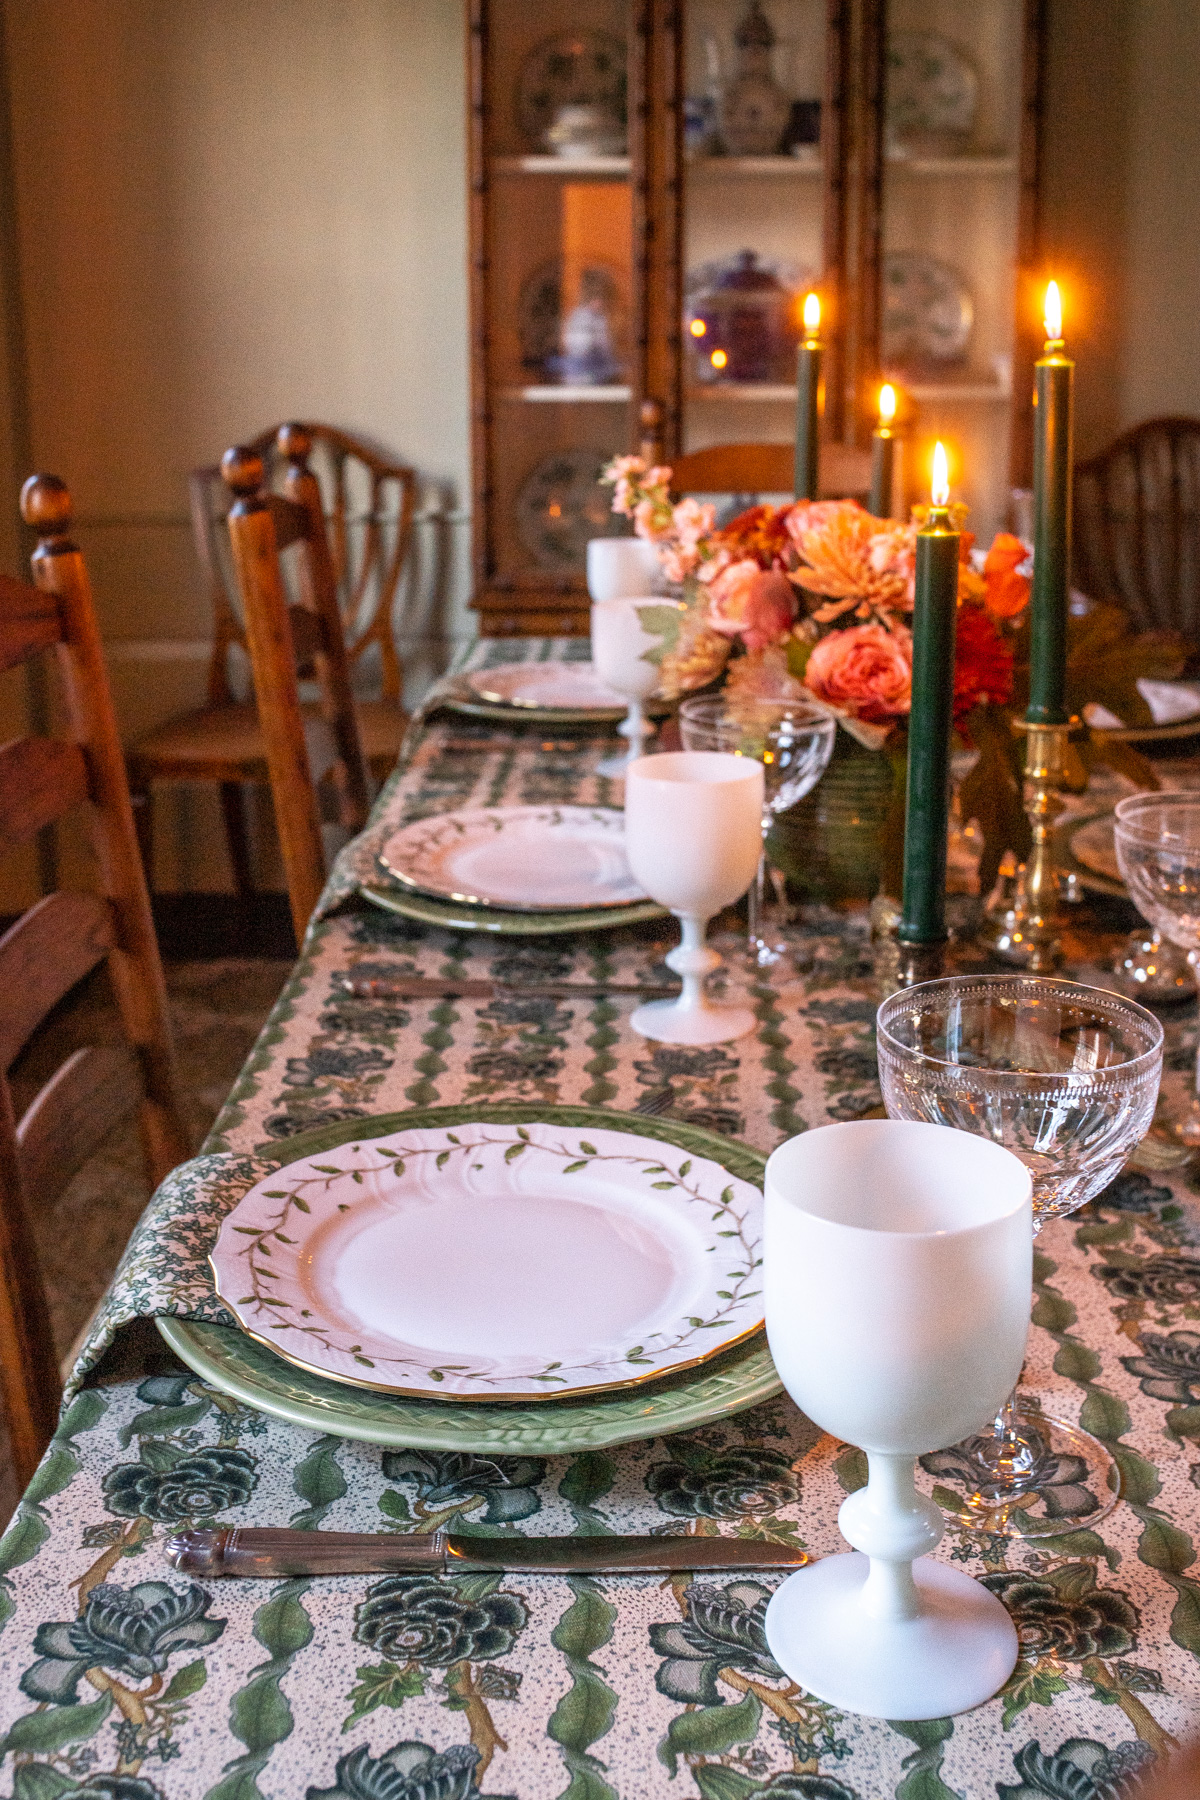 Stacie Flinner x Thanksgiving Table Herend Rothschild Garden-10.jpg